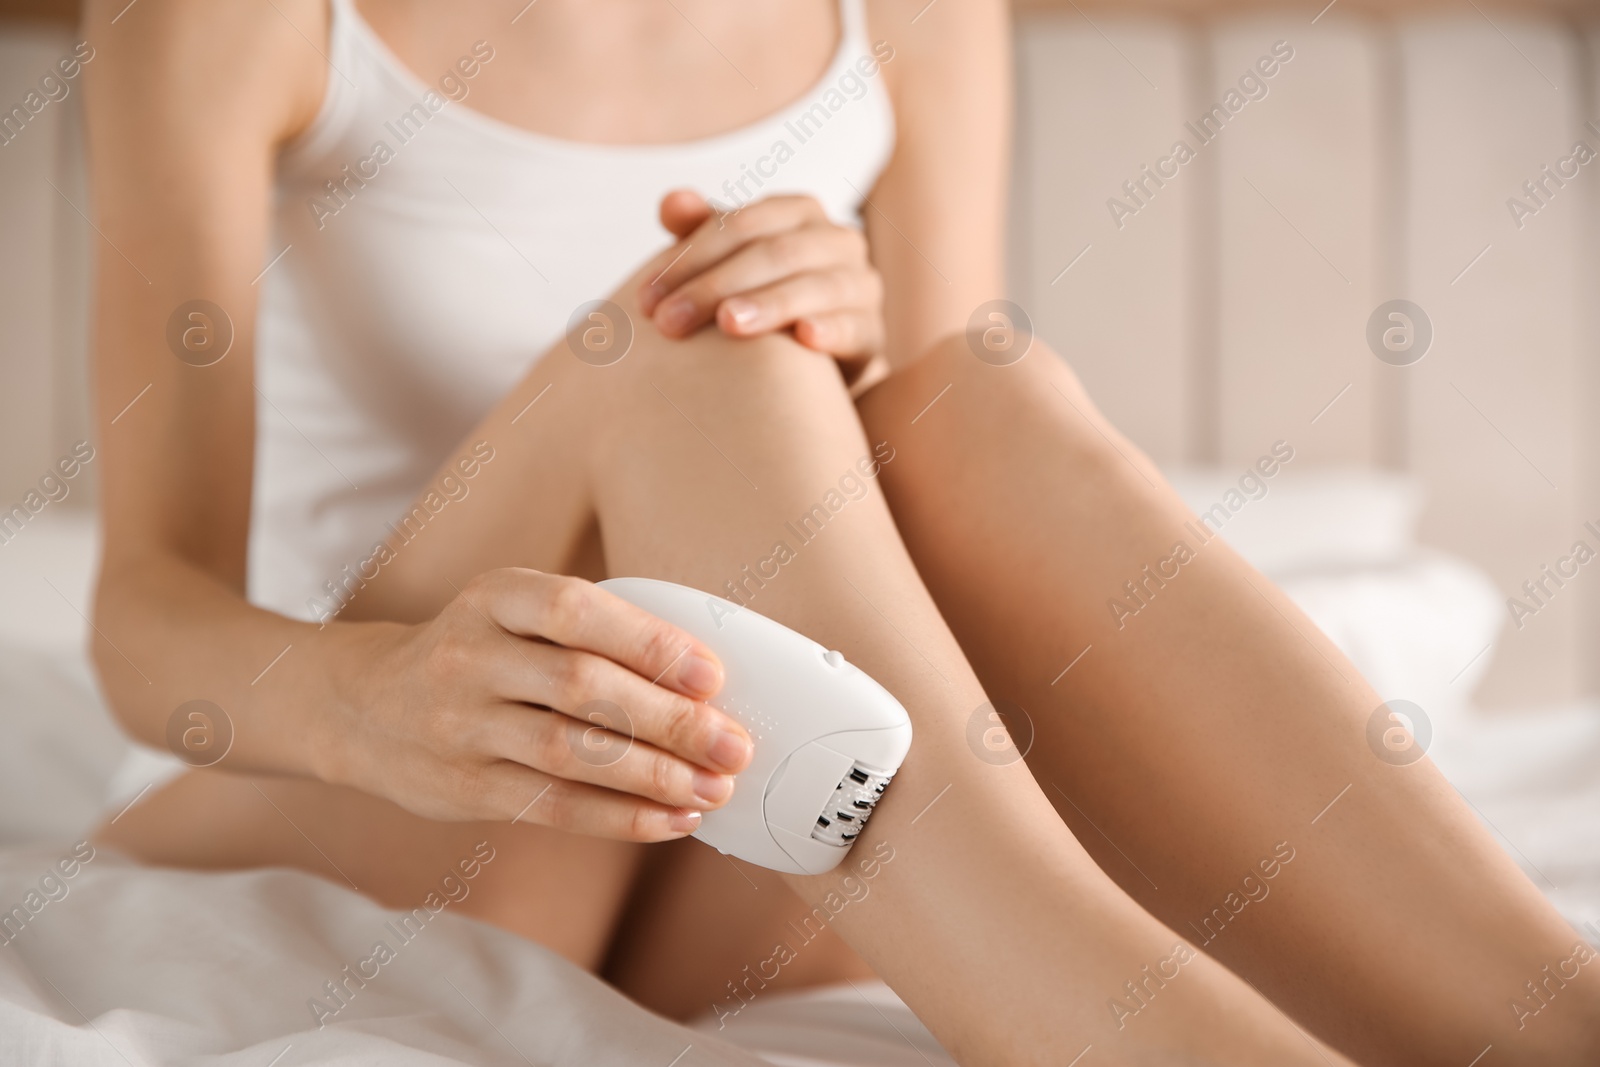 Photo of Woman doing leg epilation procedure on bed, closeup